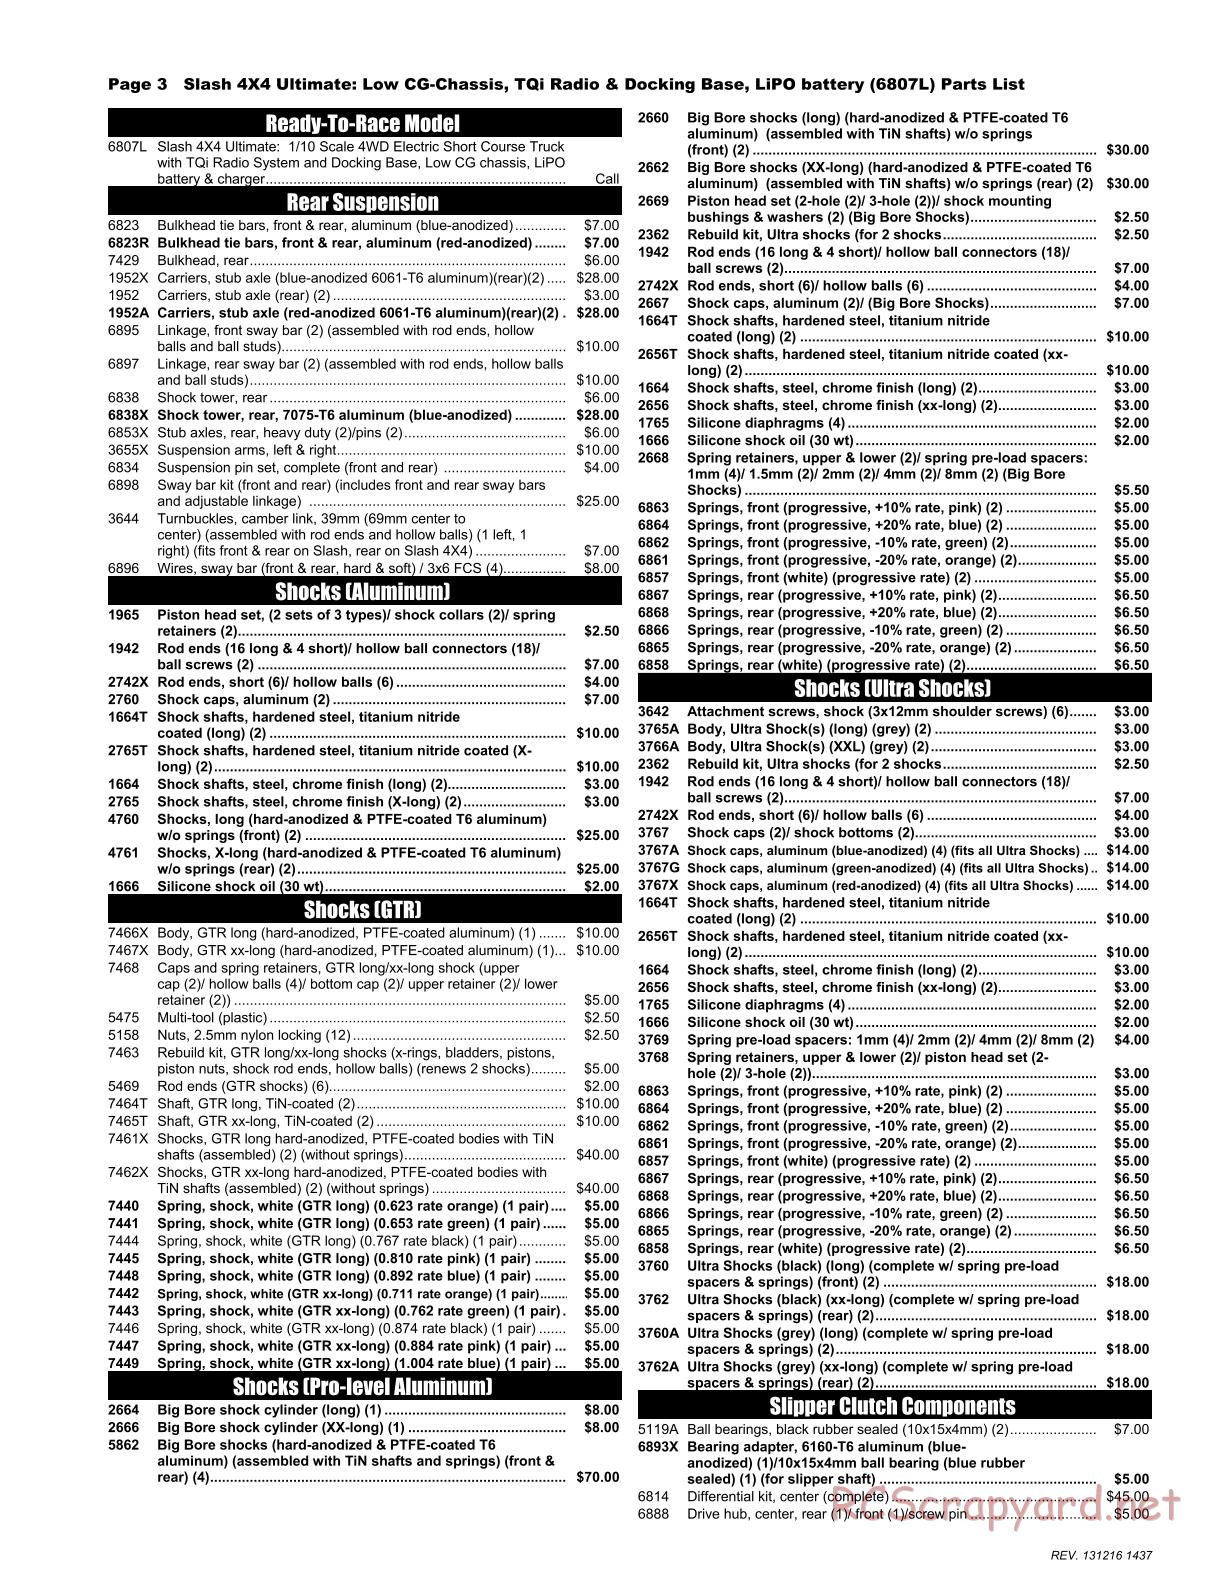 Traxxas - Slash 4x4 Ultimate LiPo (2012) - Parts List - Page 3